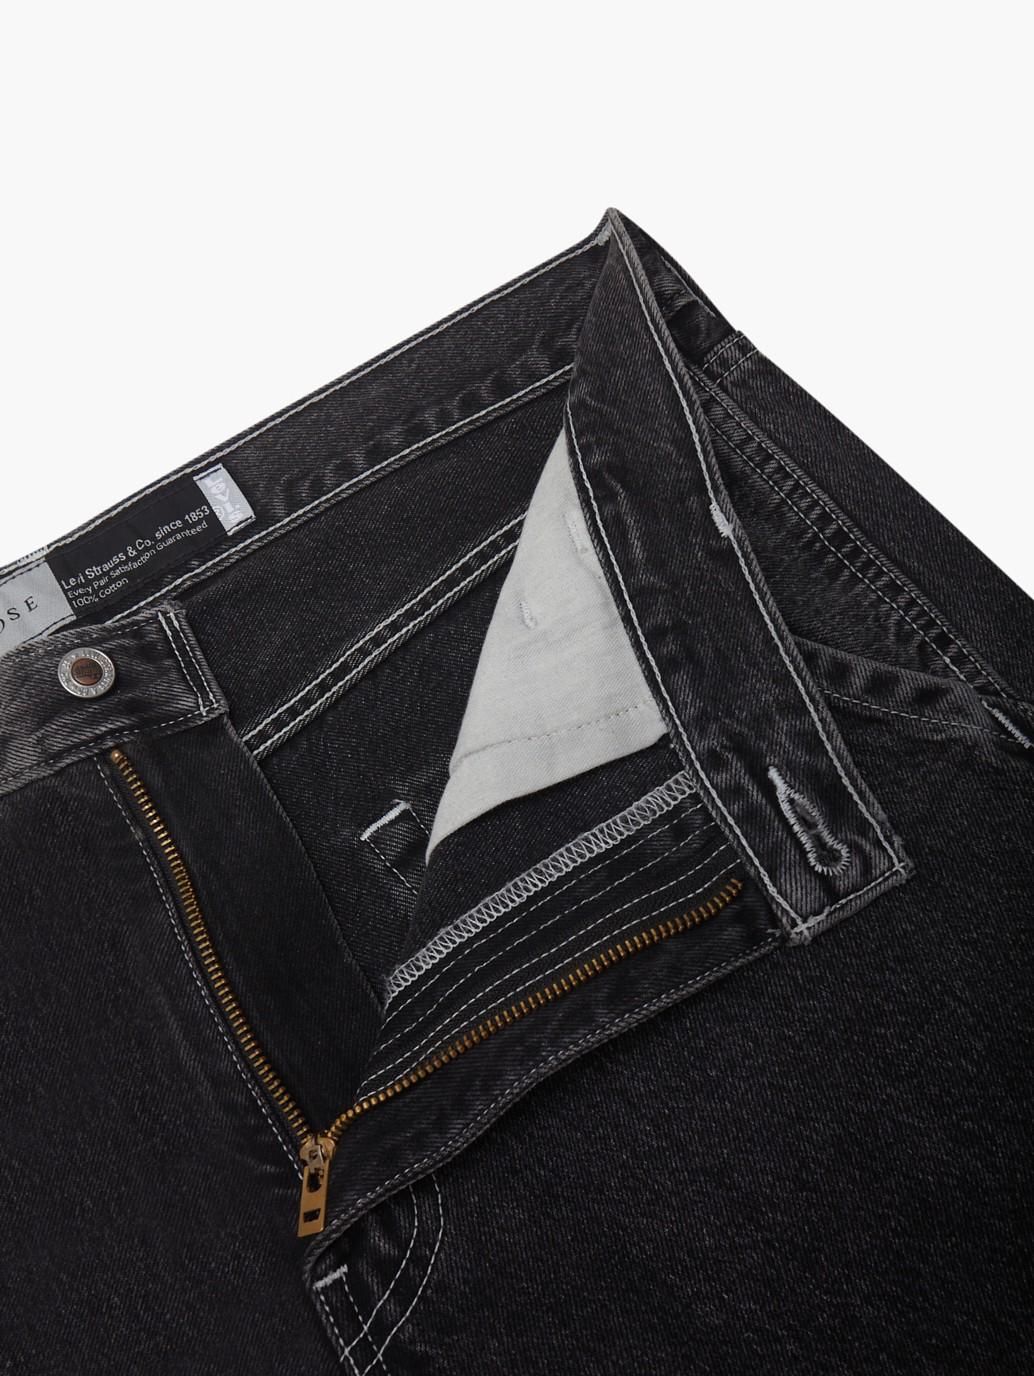 Buy Levi's® Men's SilverTab™ Loose Cargo Pants| Levi's® Official